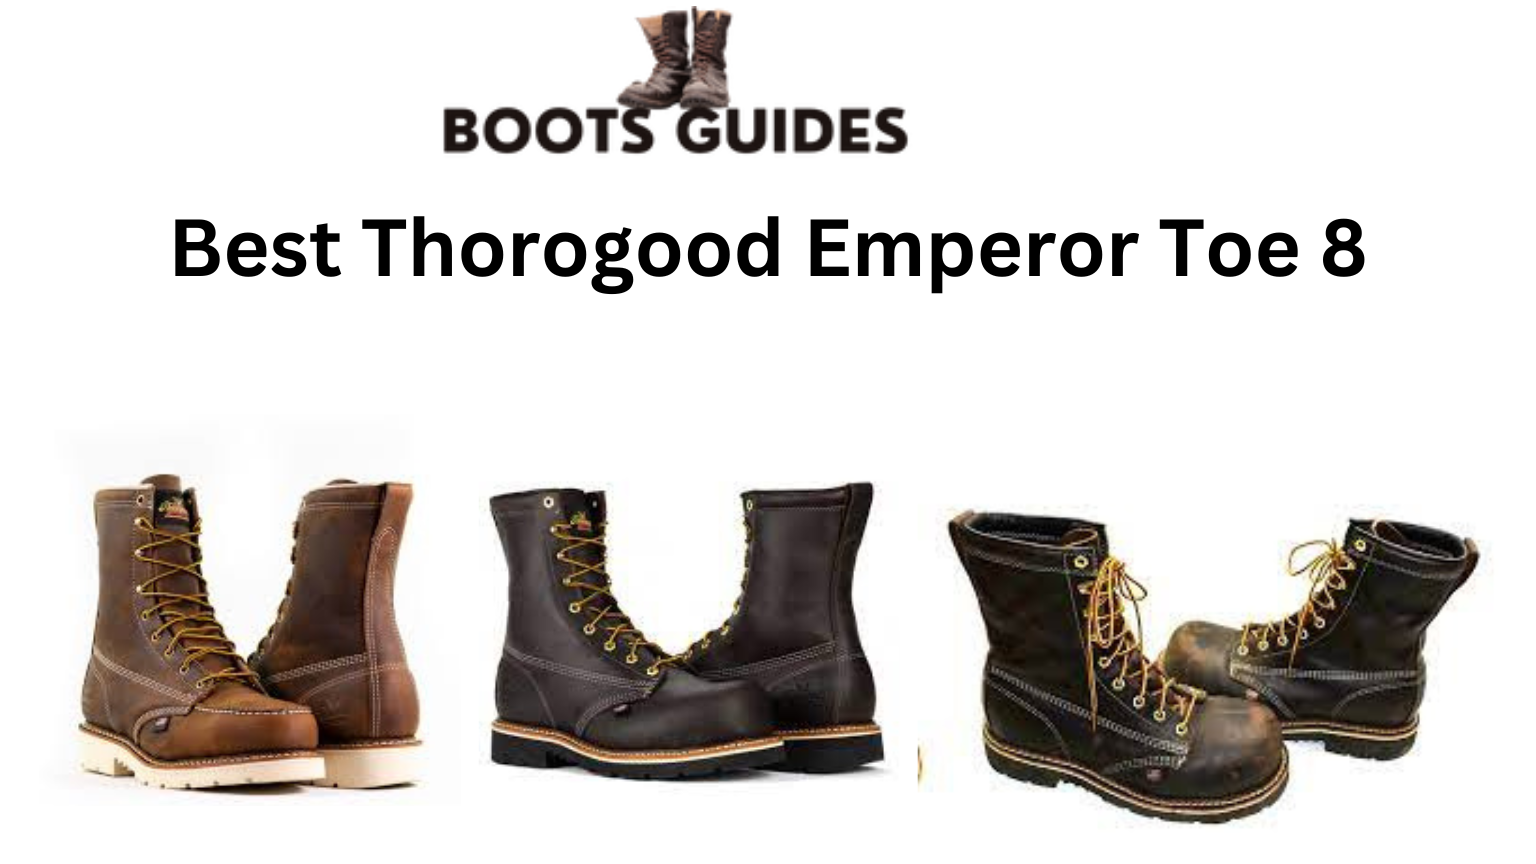 Thorogood Emperor Toe 8